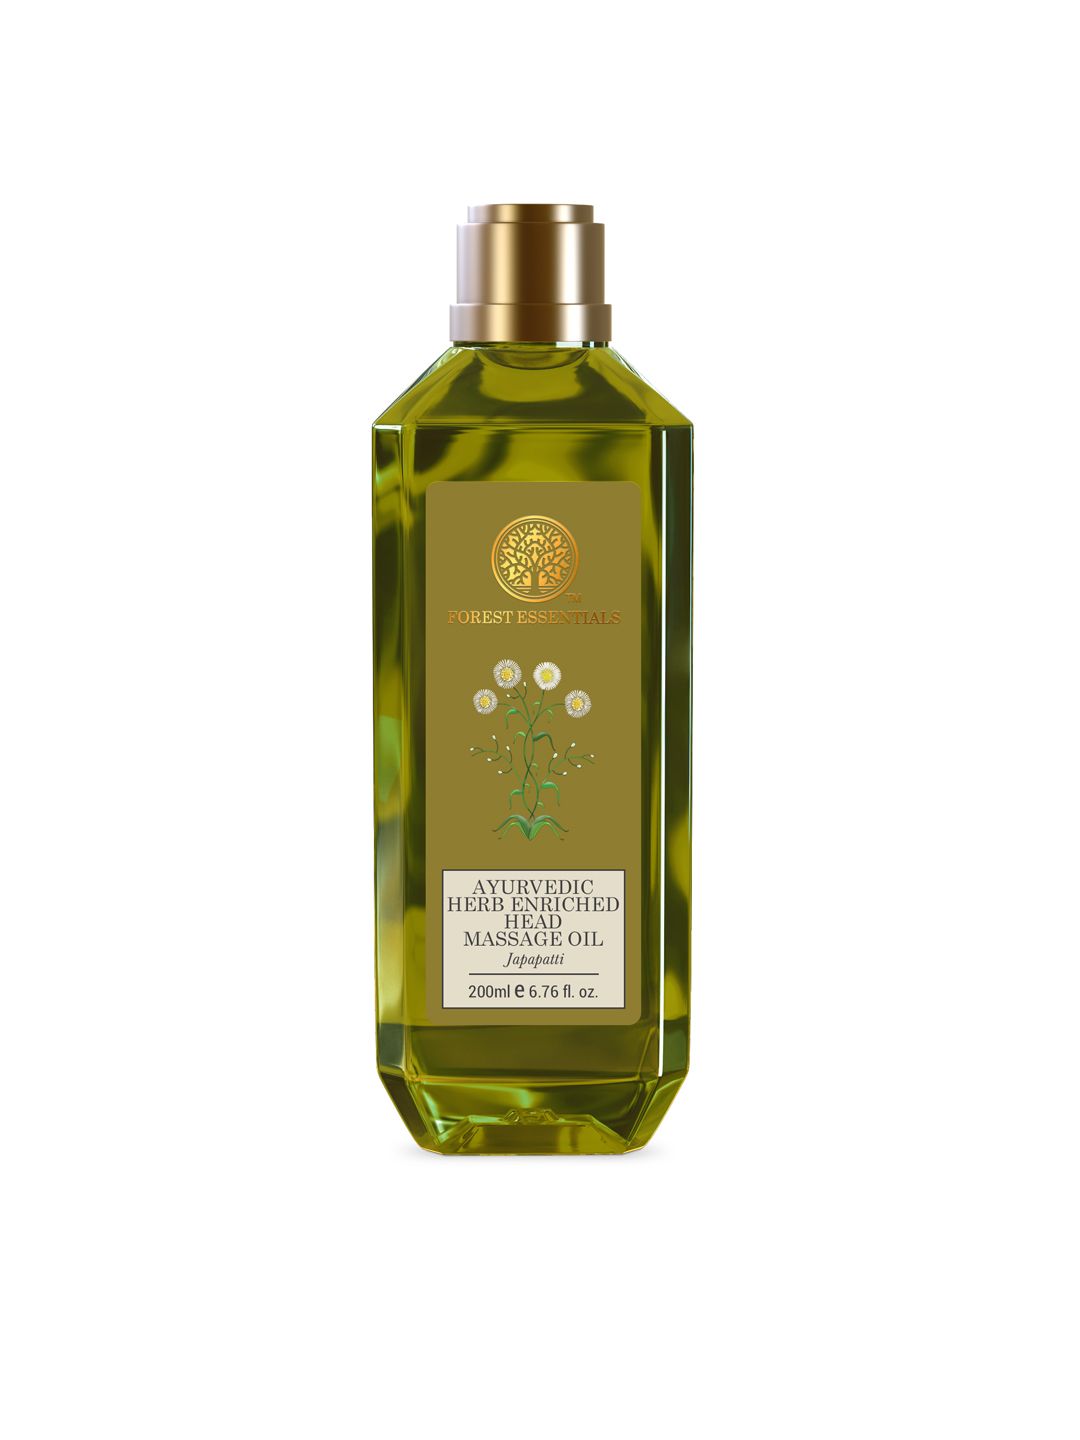 Forest Essentials Ayurvedic Herb Enriched Head Massage Hair Oil Japapatti 200ml Price in India